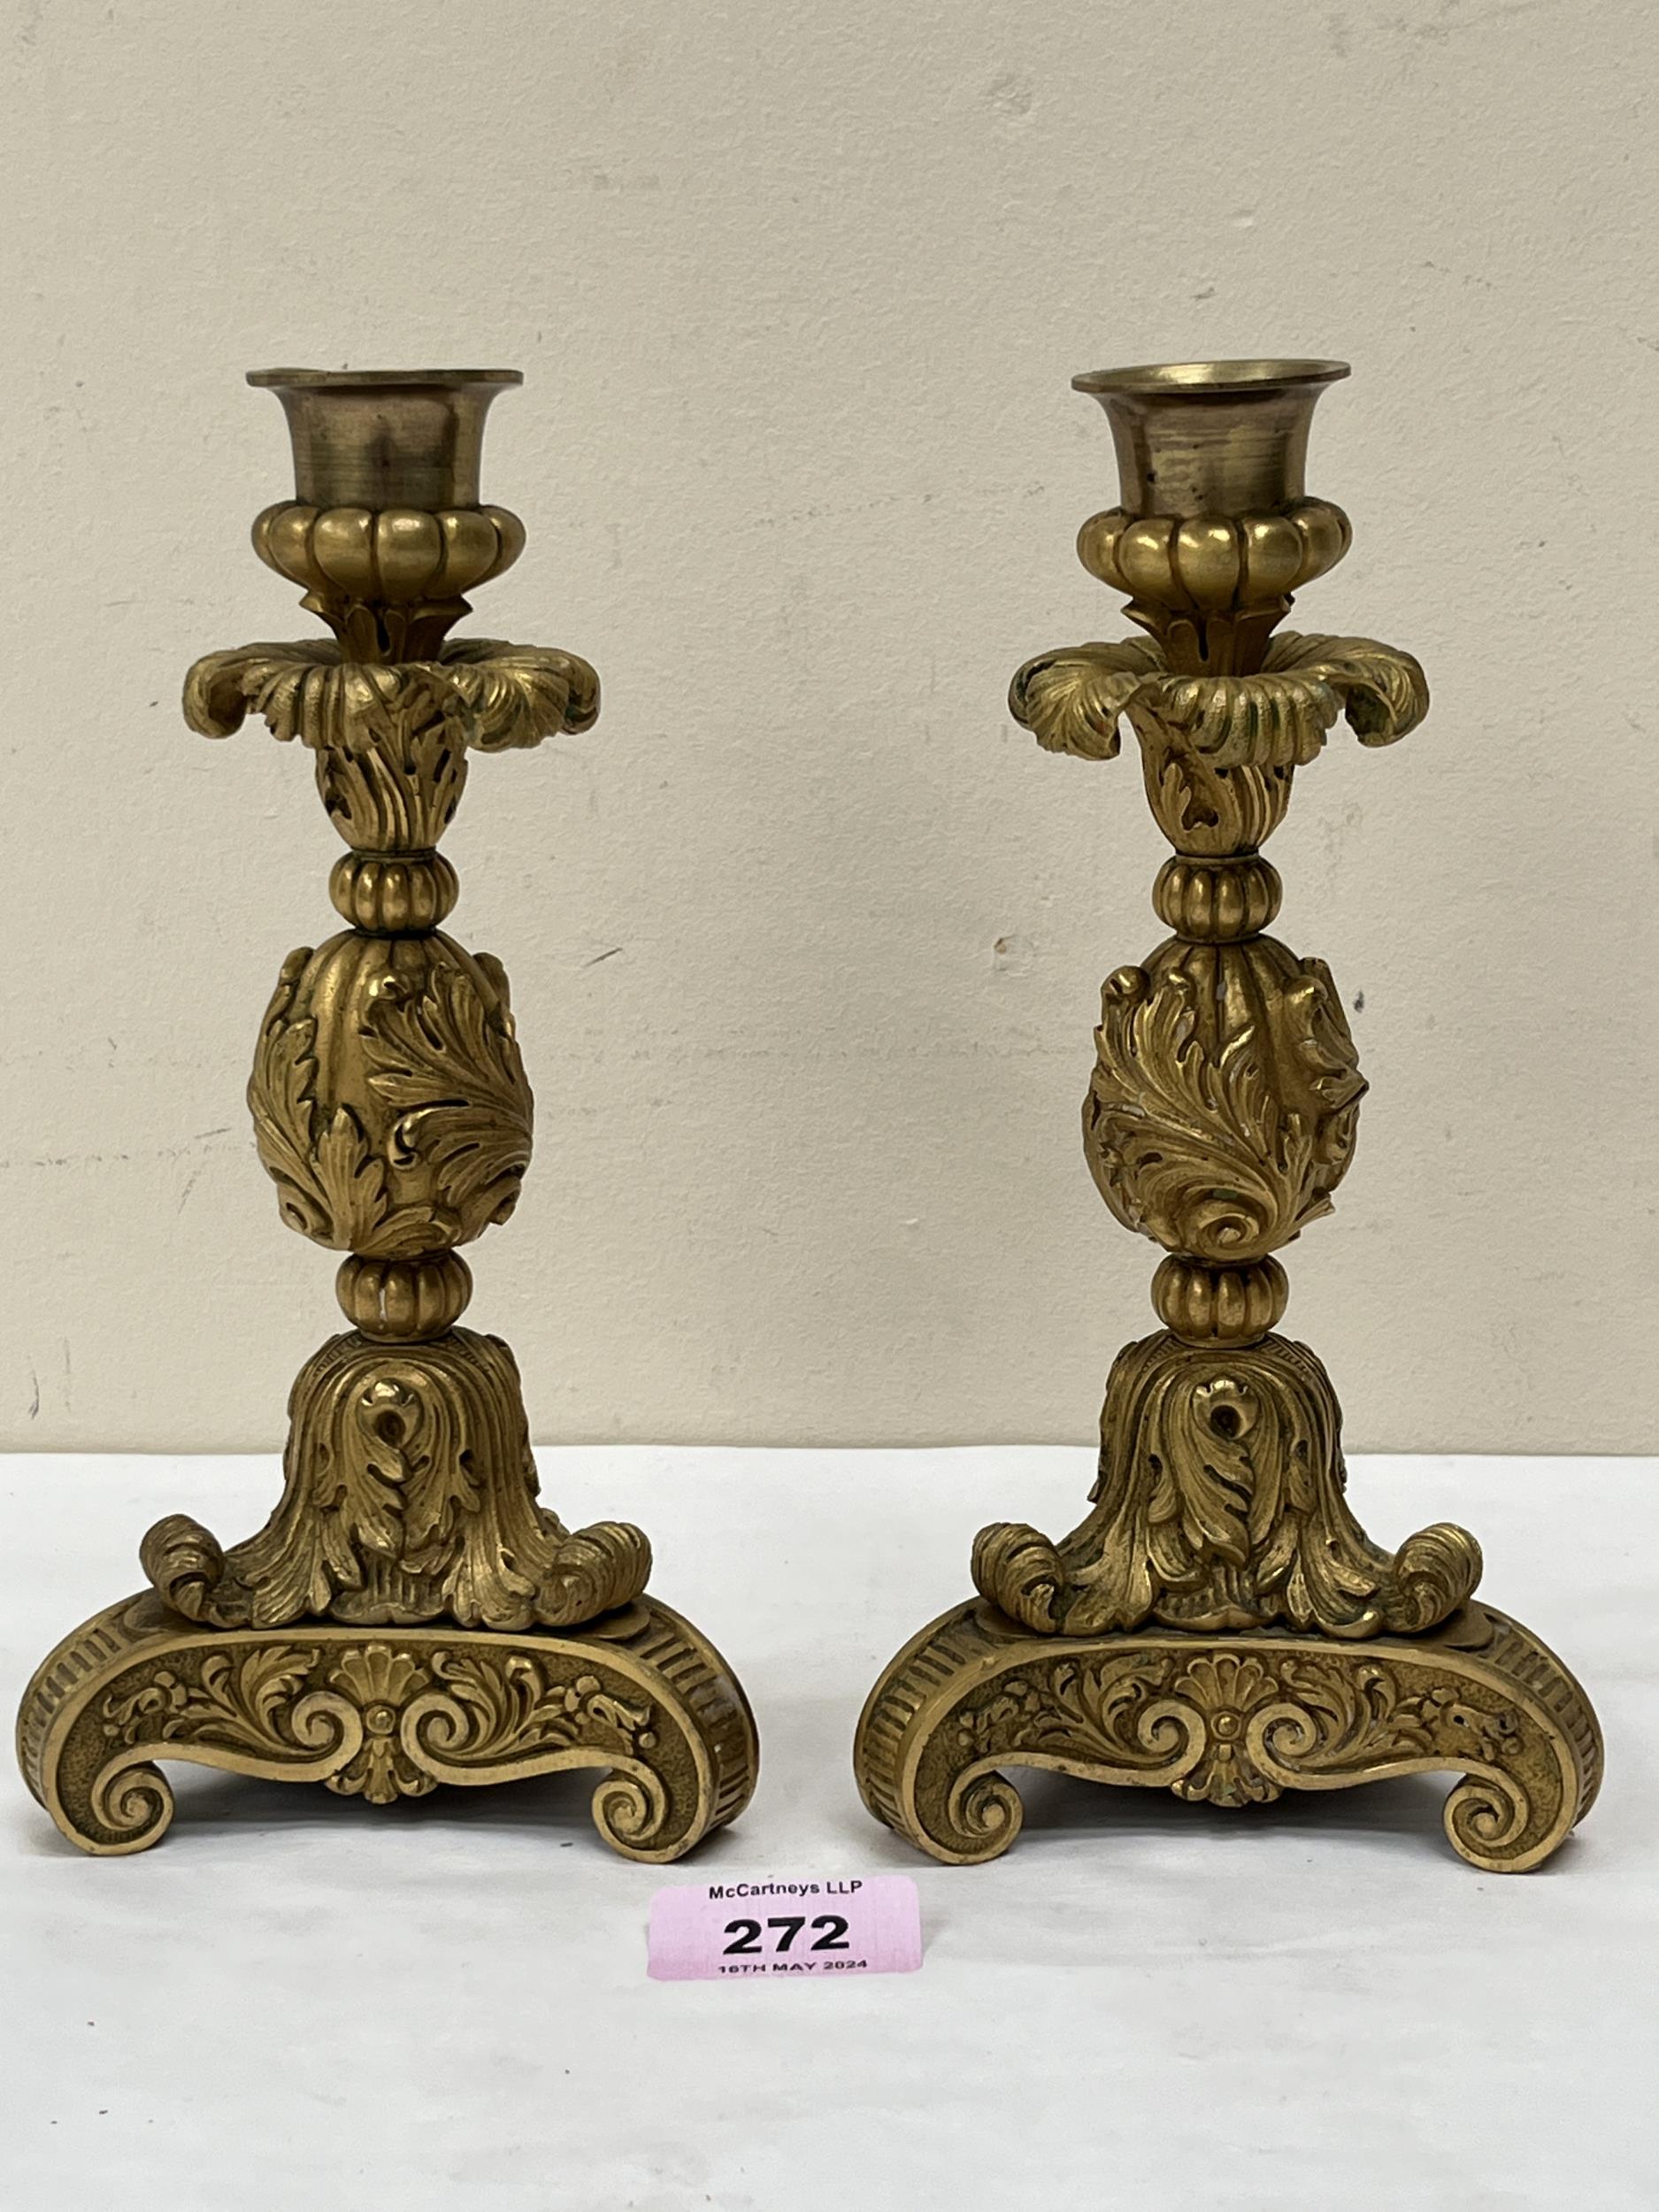 A pair of 19th Century French bronze ormolu candlesticks, 8½" high.